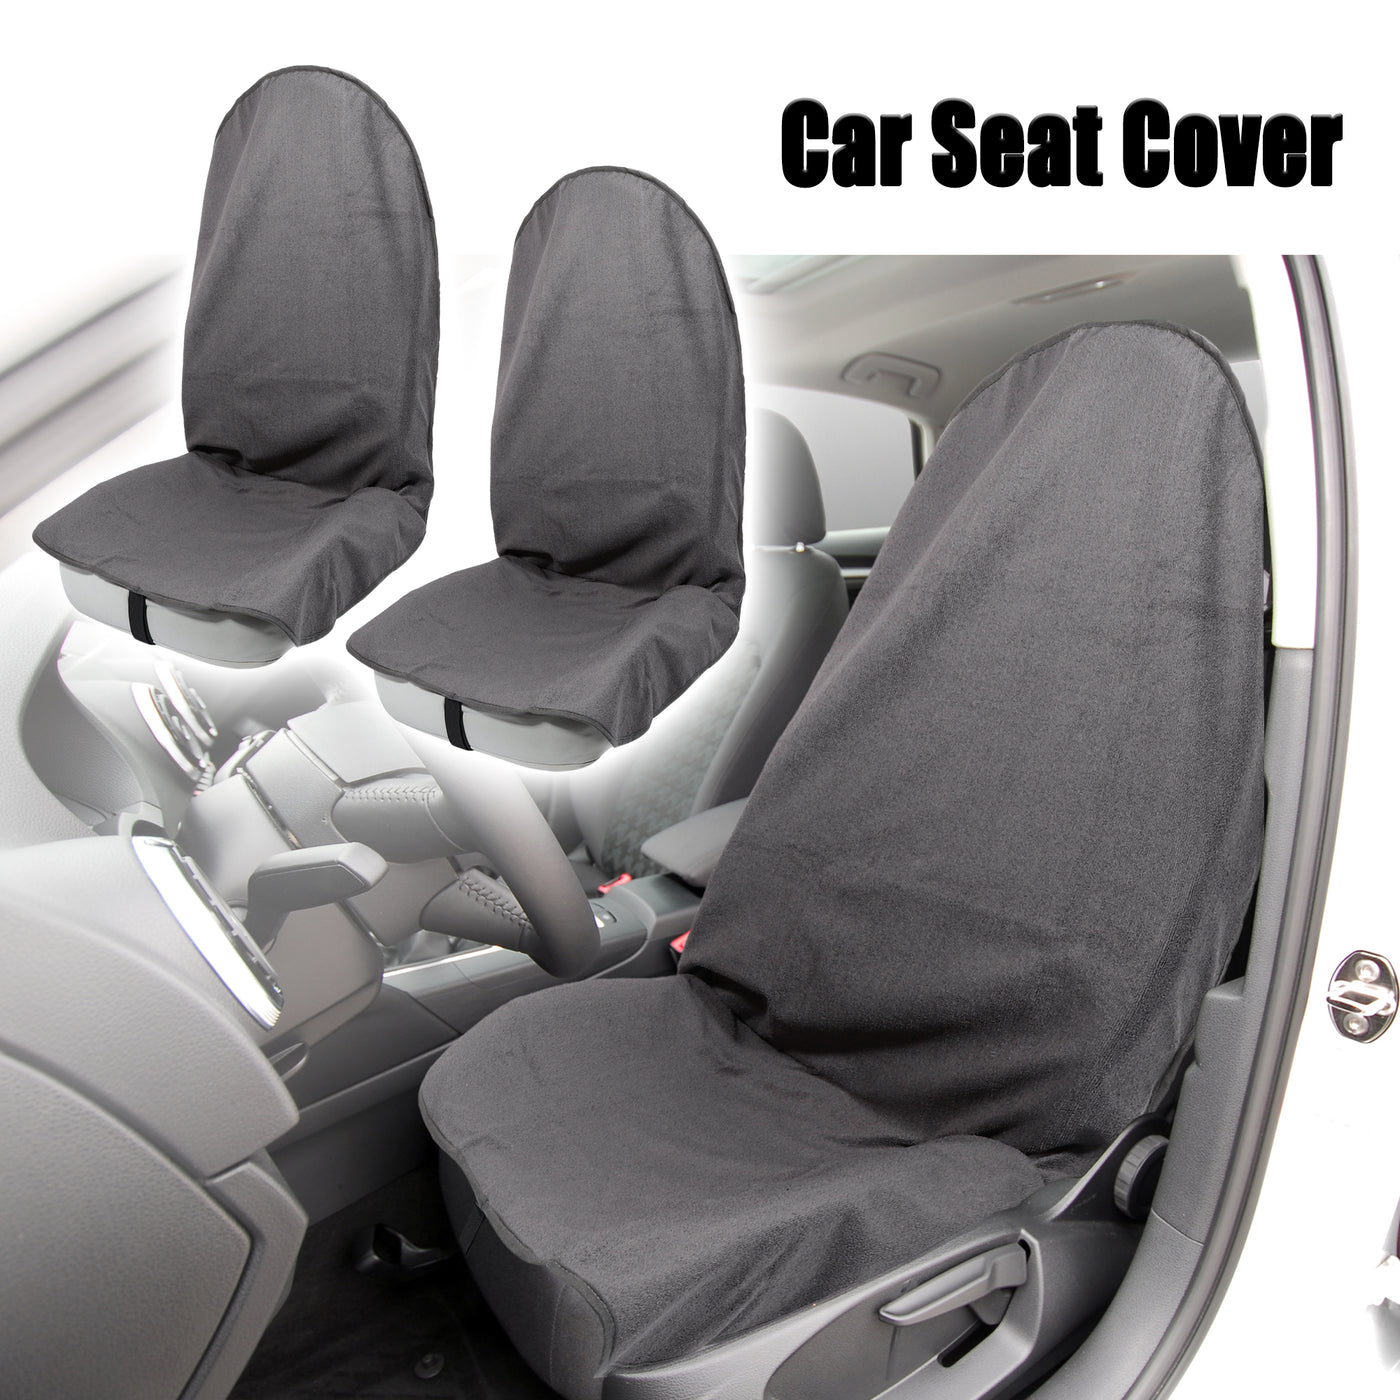 X AUTOHAUX 2pcs Gray Universal Car Seat Cover Anti-Slip Towel Seat Protector Pad for Car Trucks SUV